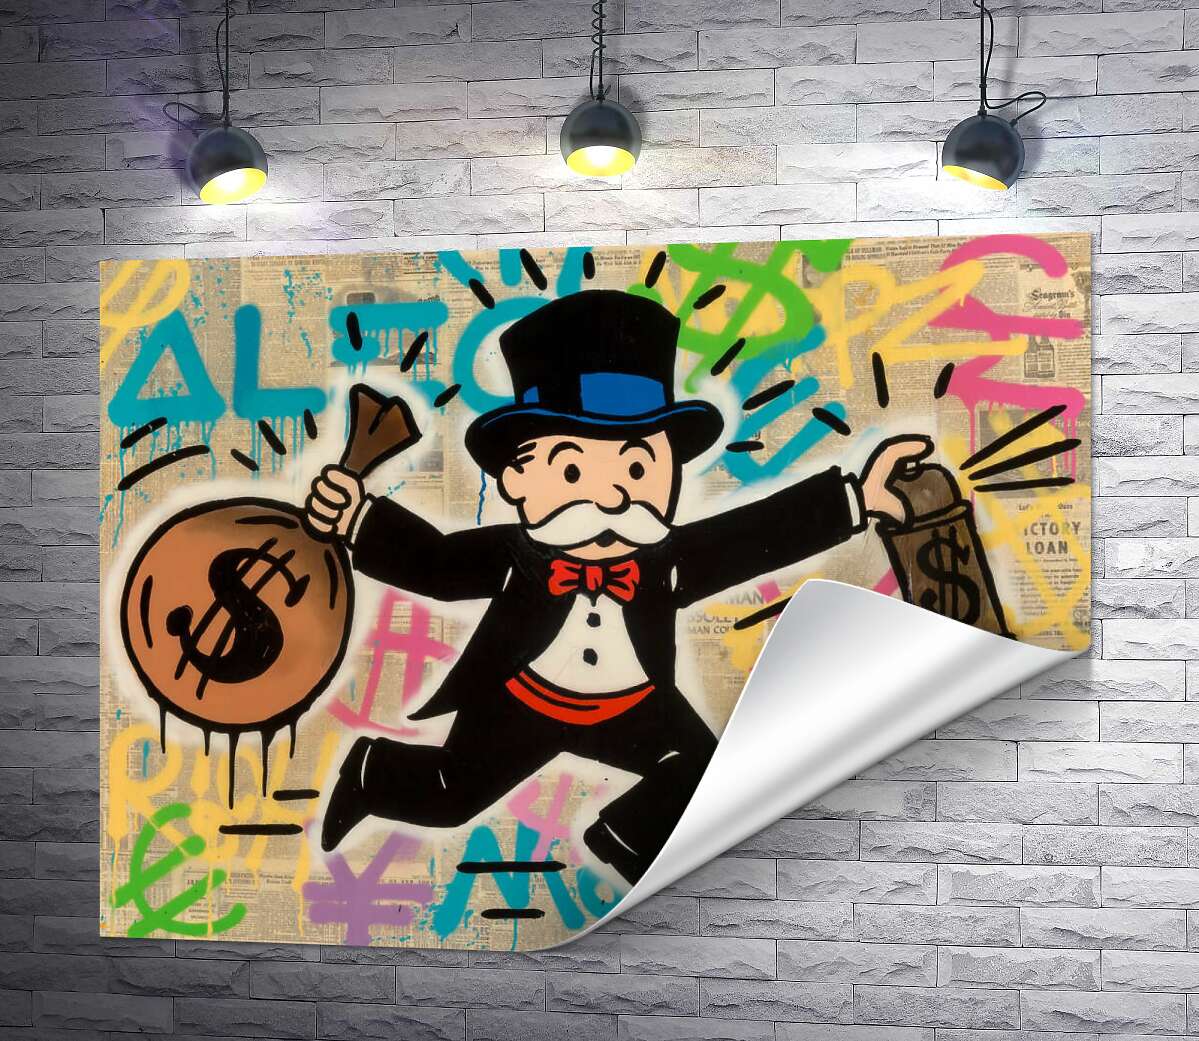 друк Містер Монополі з грошима (Mr. Monopoly with money) - Алек Монополі (Alec Monopoly)